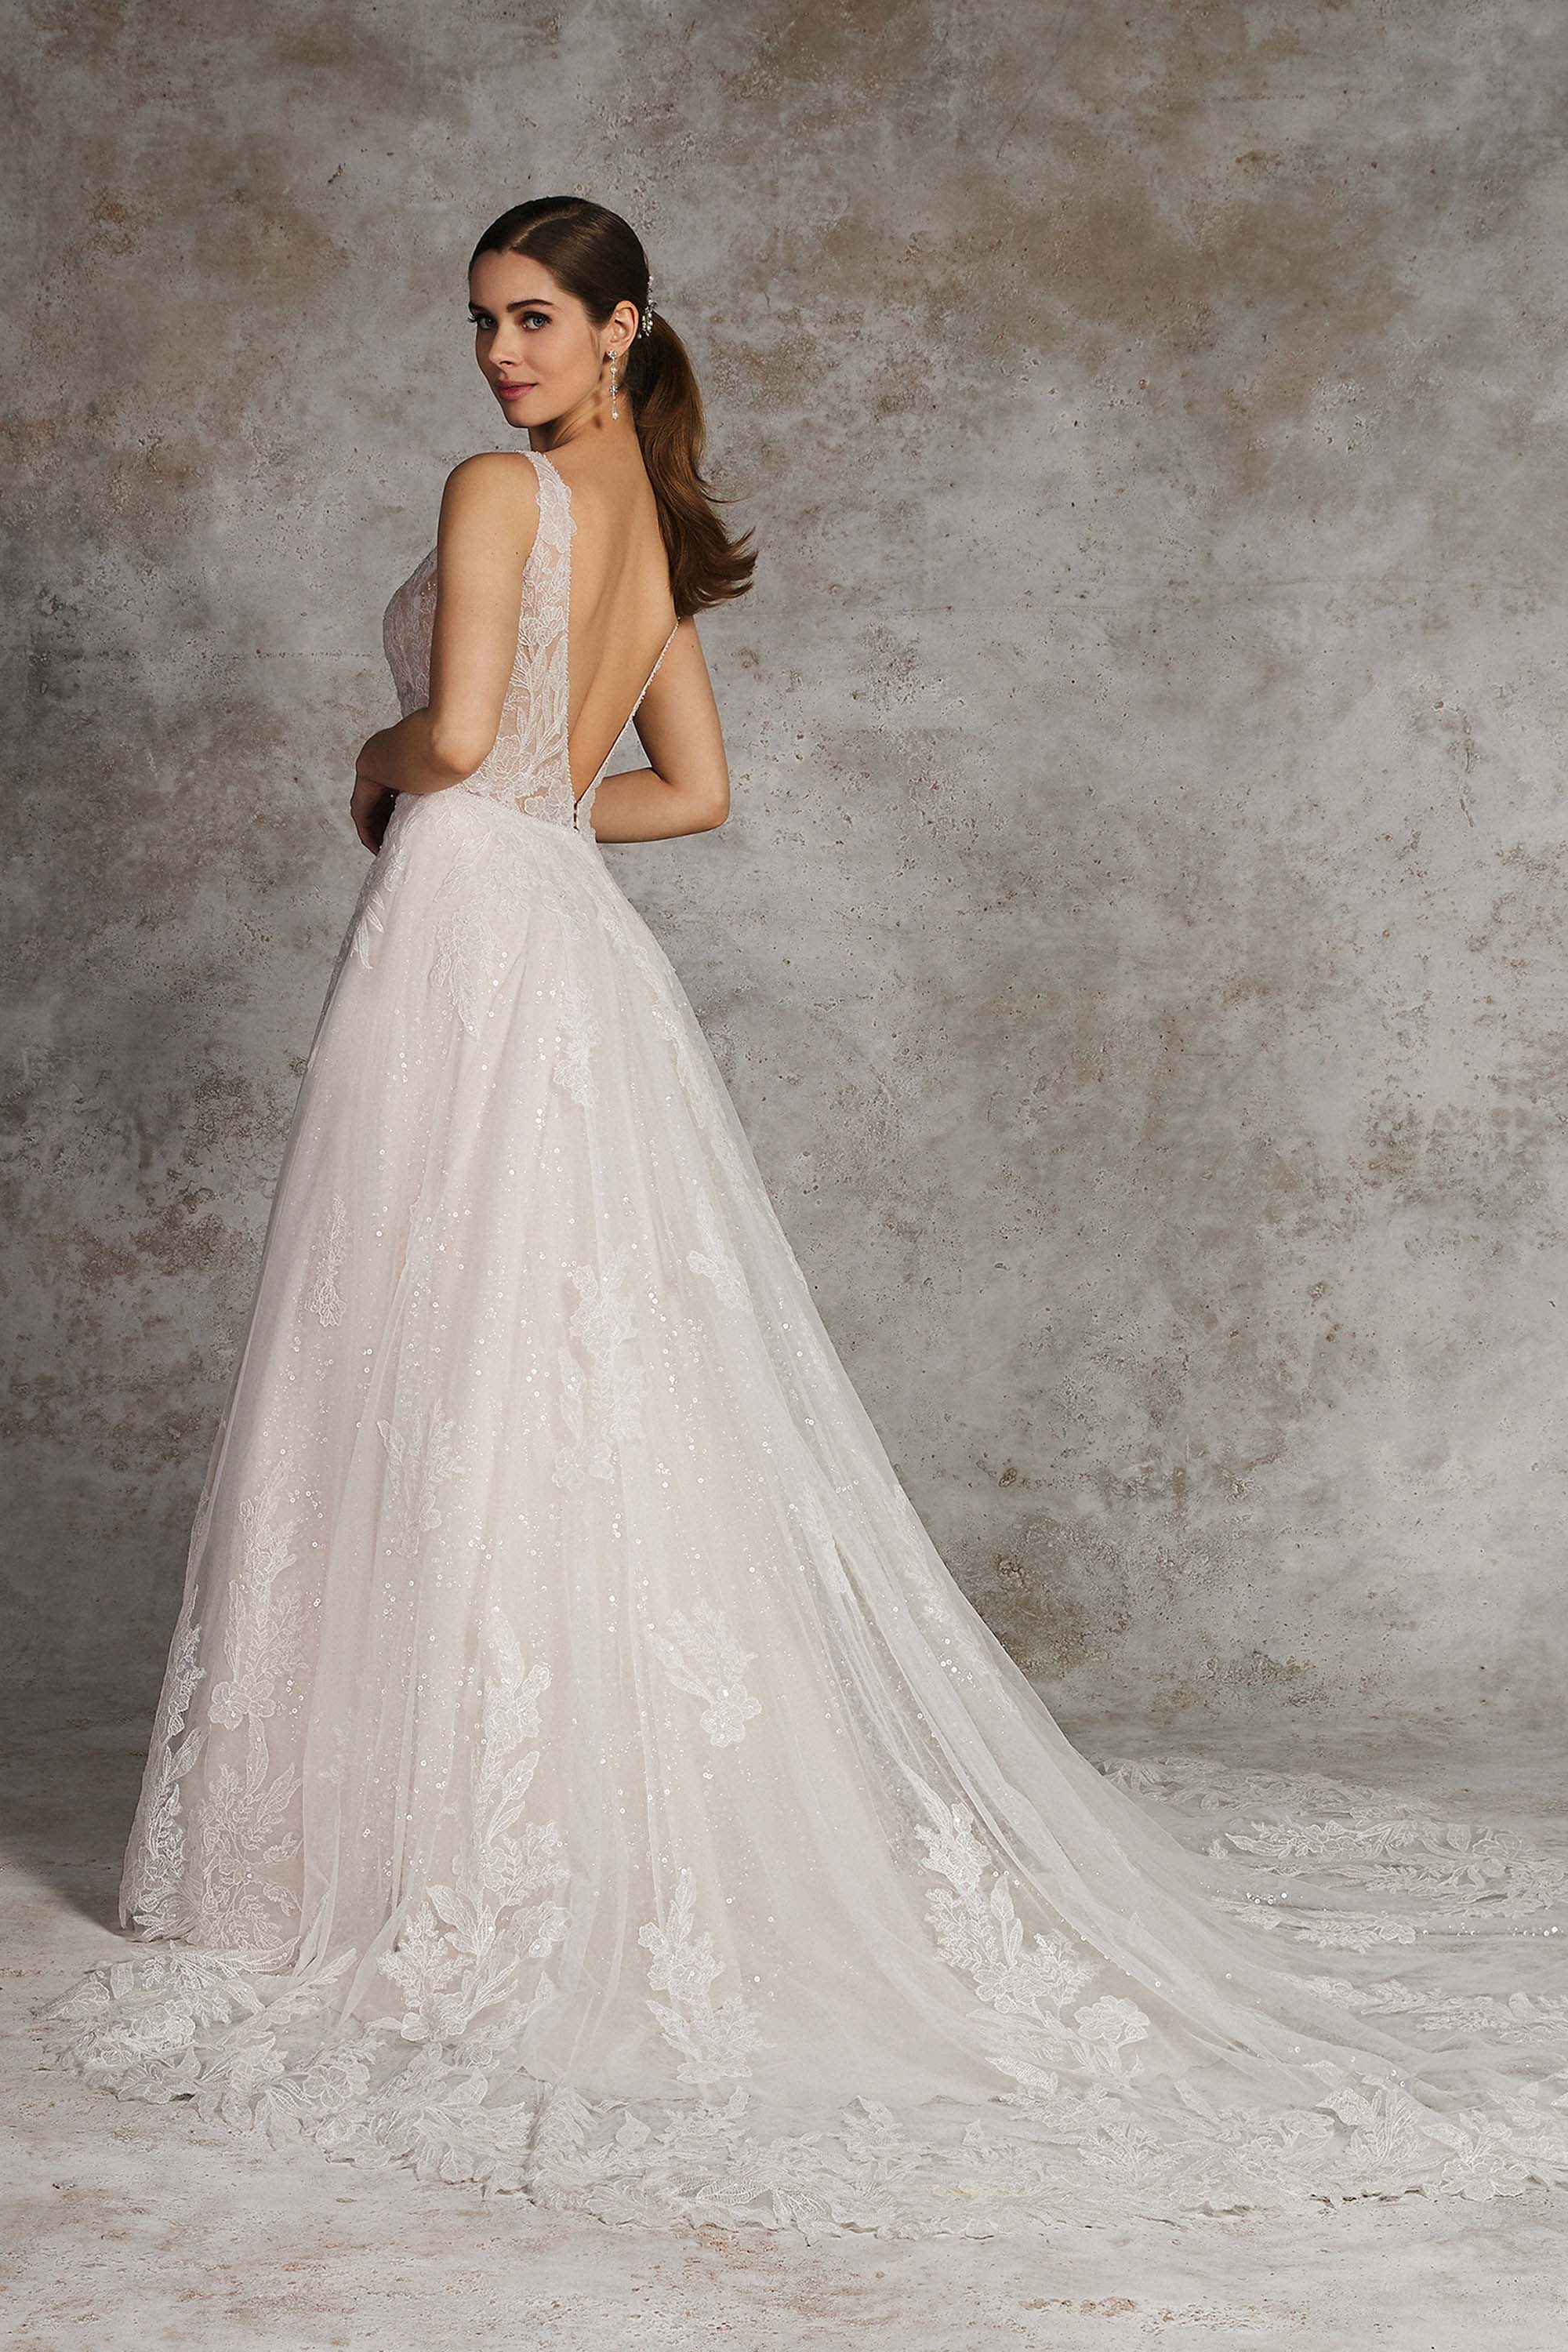 *NEW* Rings Designer Wedding Gown - #55066LND